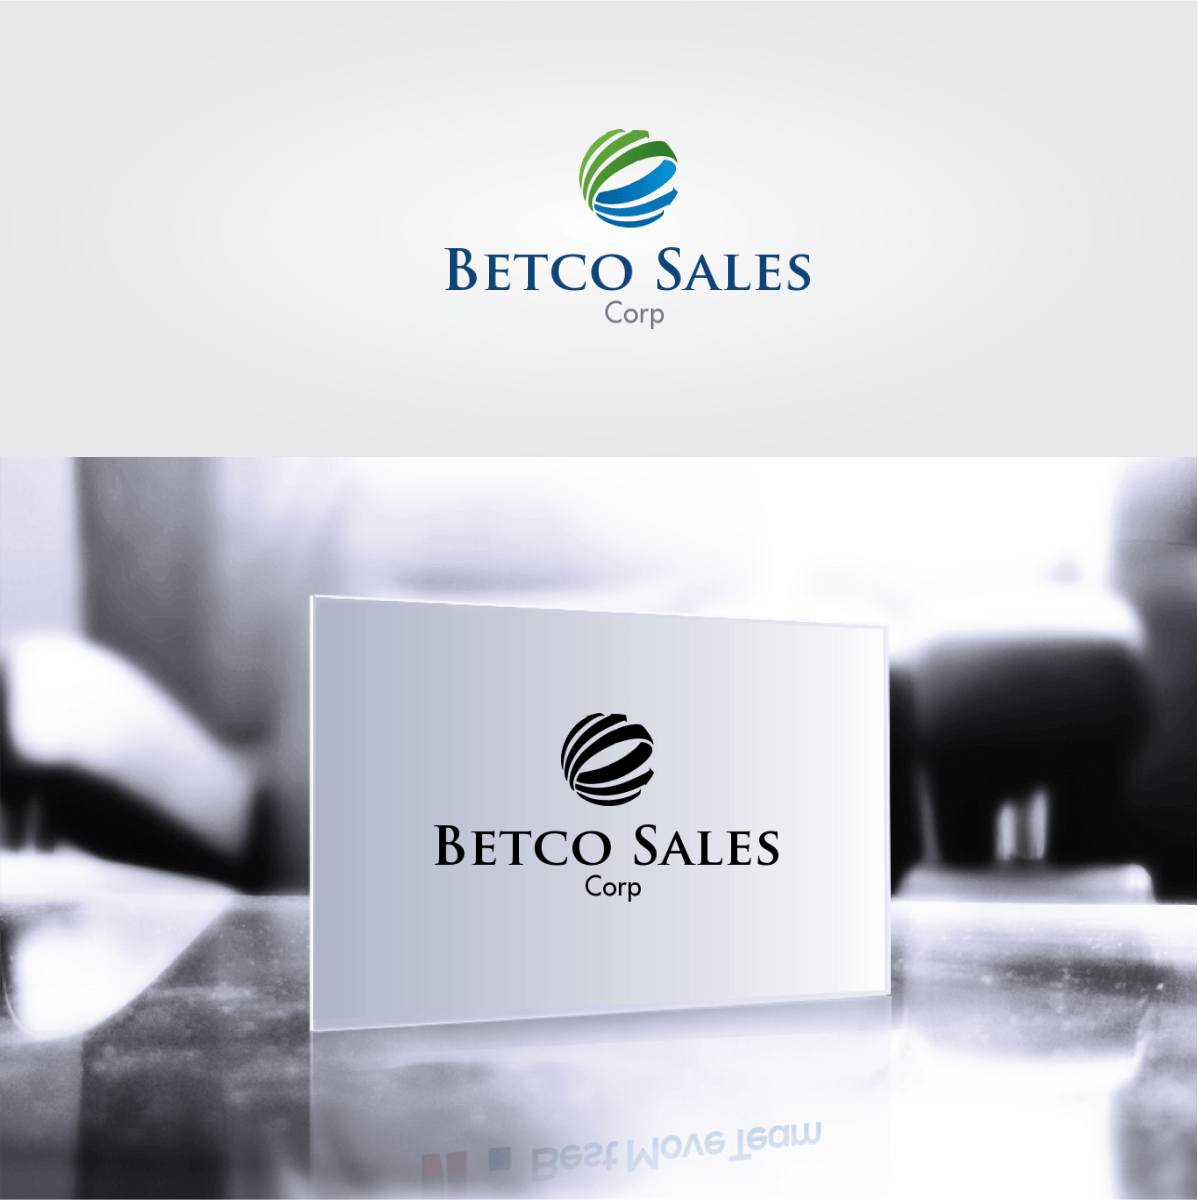 Betco Logo - Logo Design for Betco Sales Corp by Spanjanghari | Design #21888499